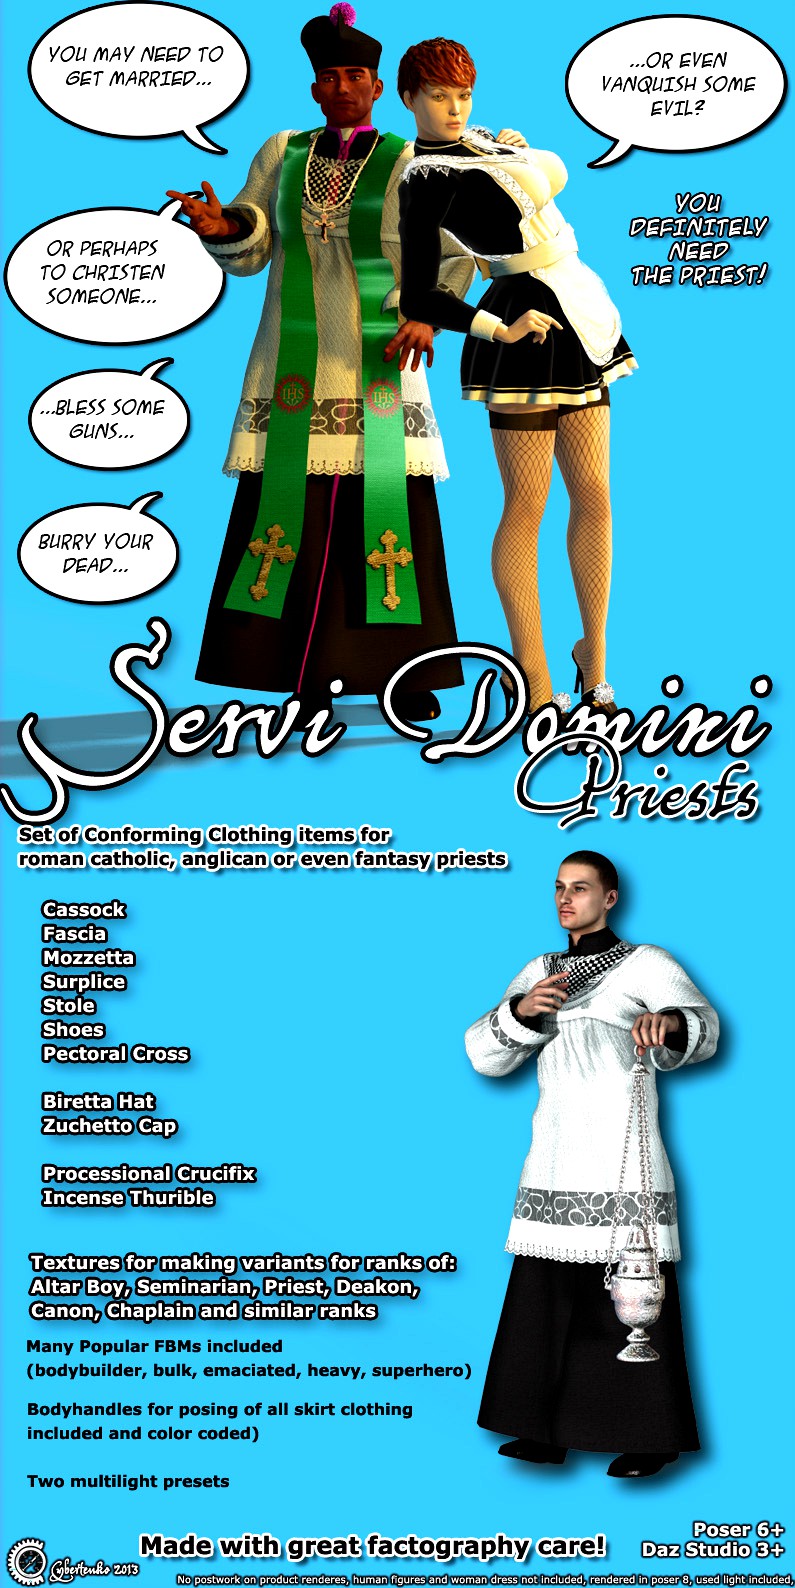 Servi Domini - Priests